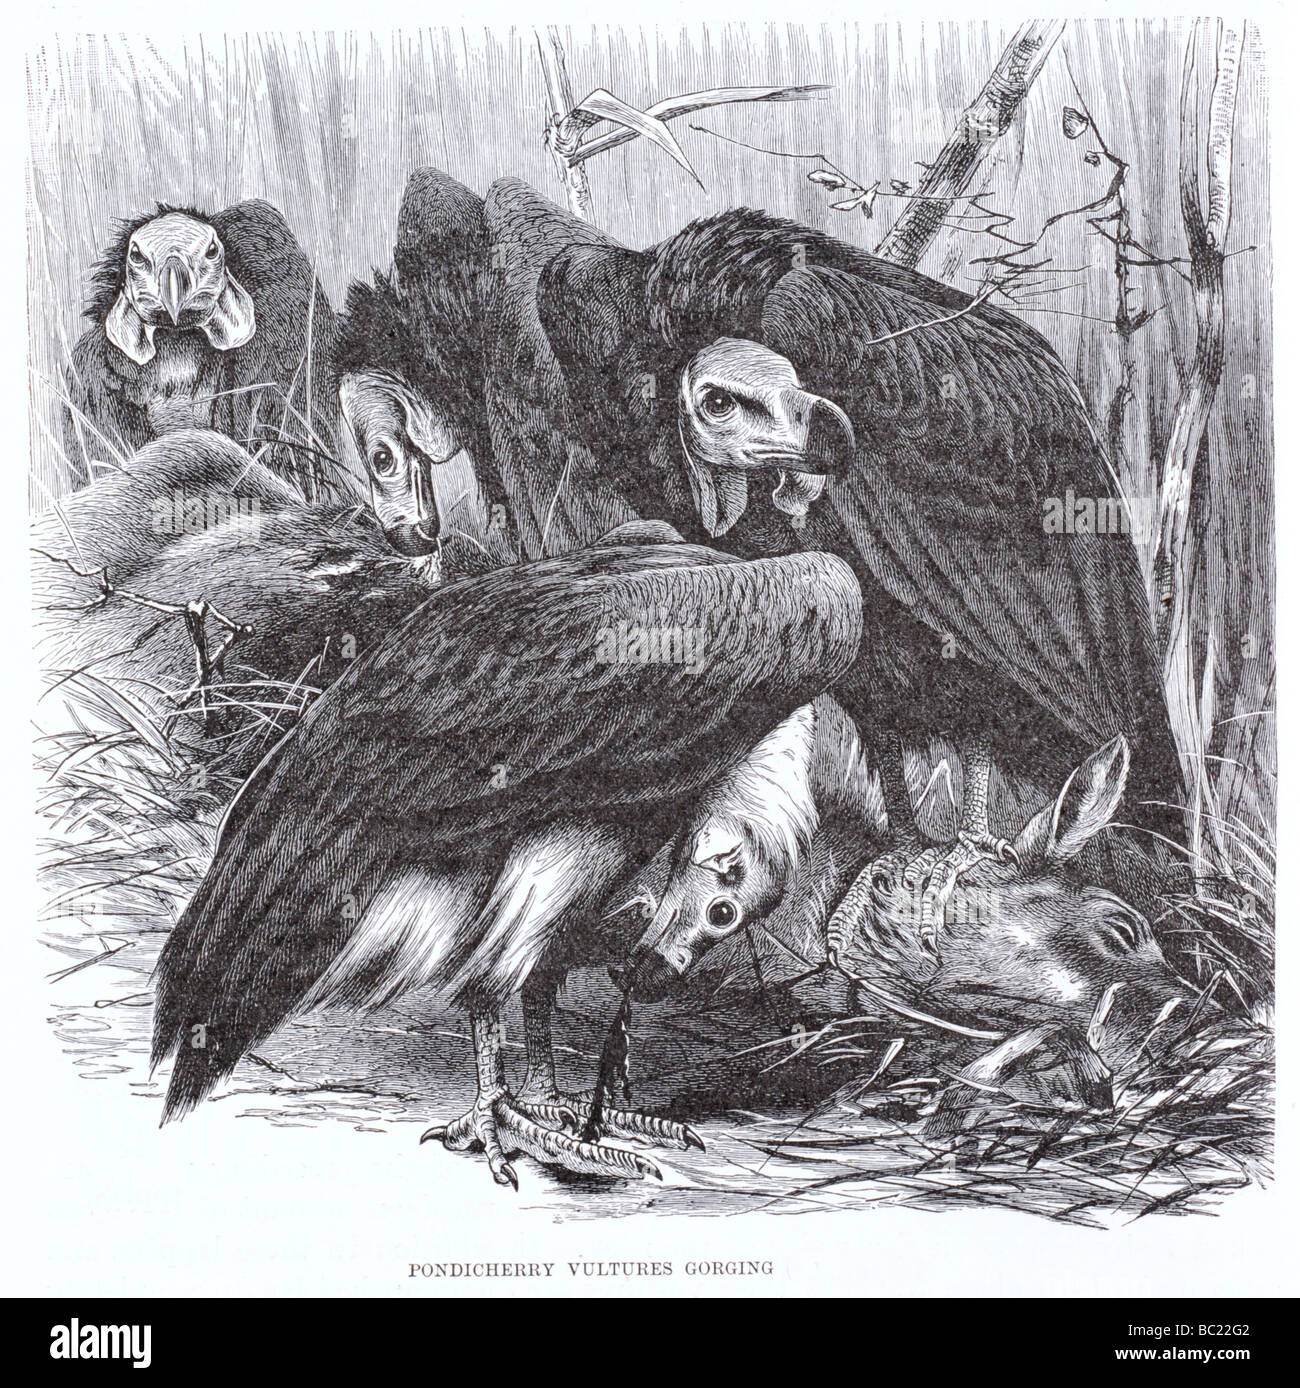 pondicherry vultures gorging Stock Photo